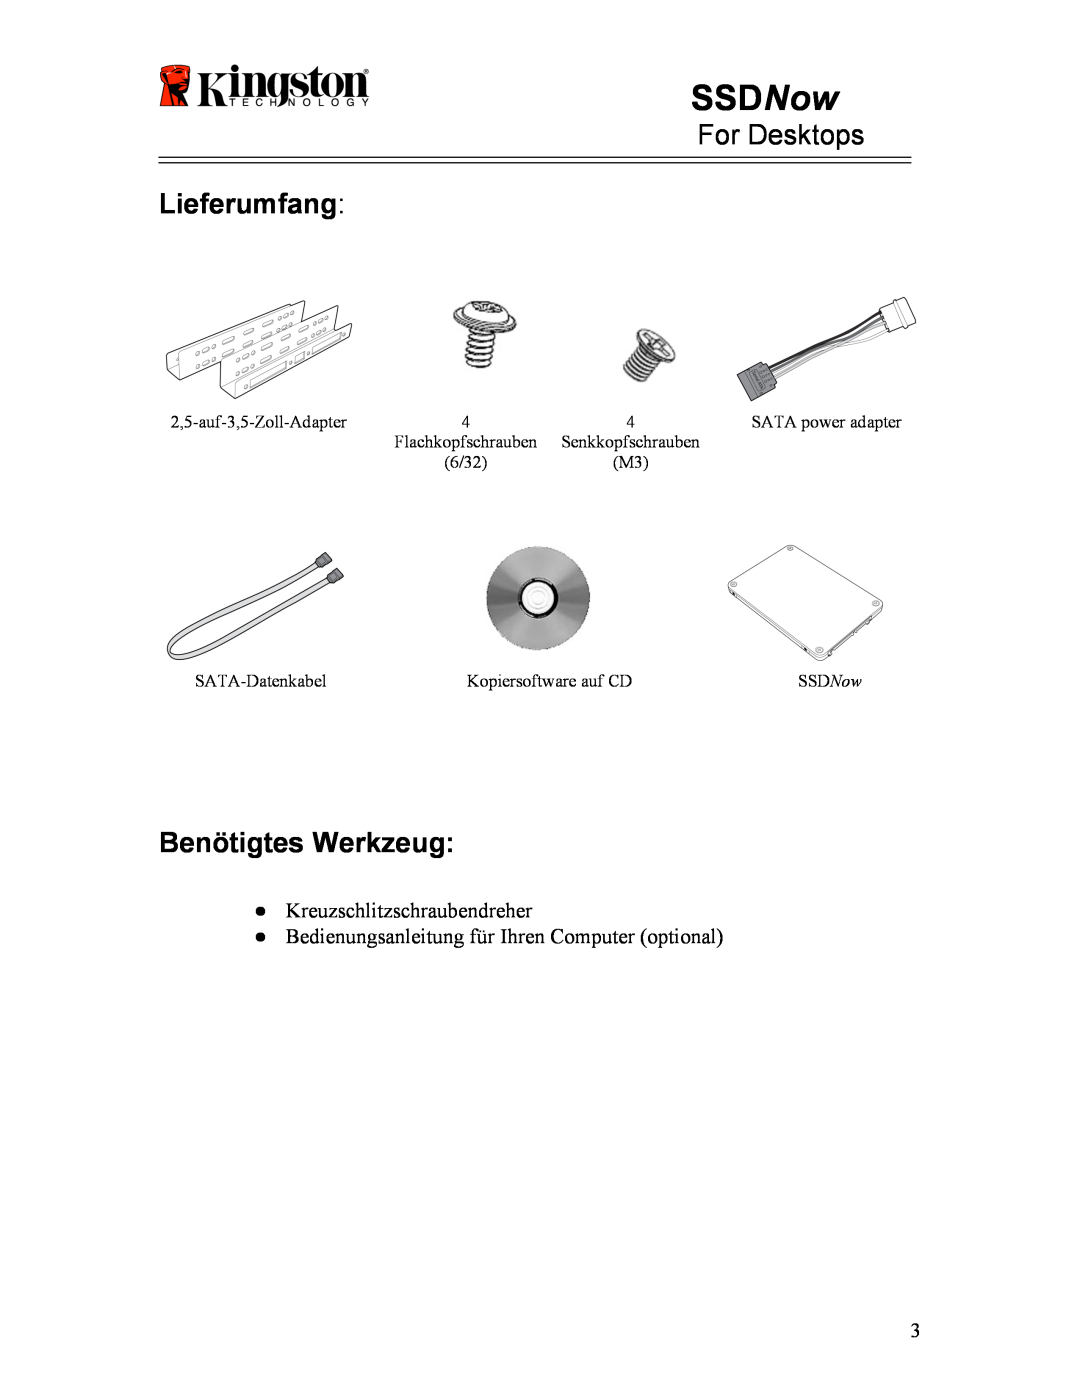 Kingston Technology 07-16-2009 manual Lieferumfang, Benötigtes Werkzeug, SSDNow, For Desktops, SATA power adapter 